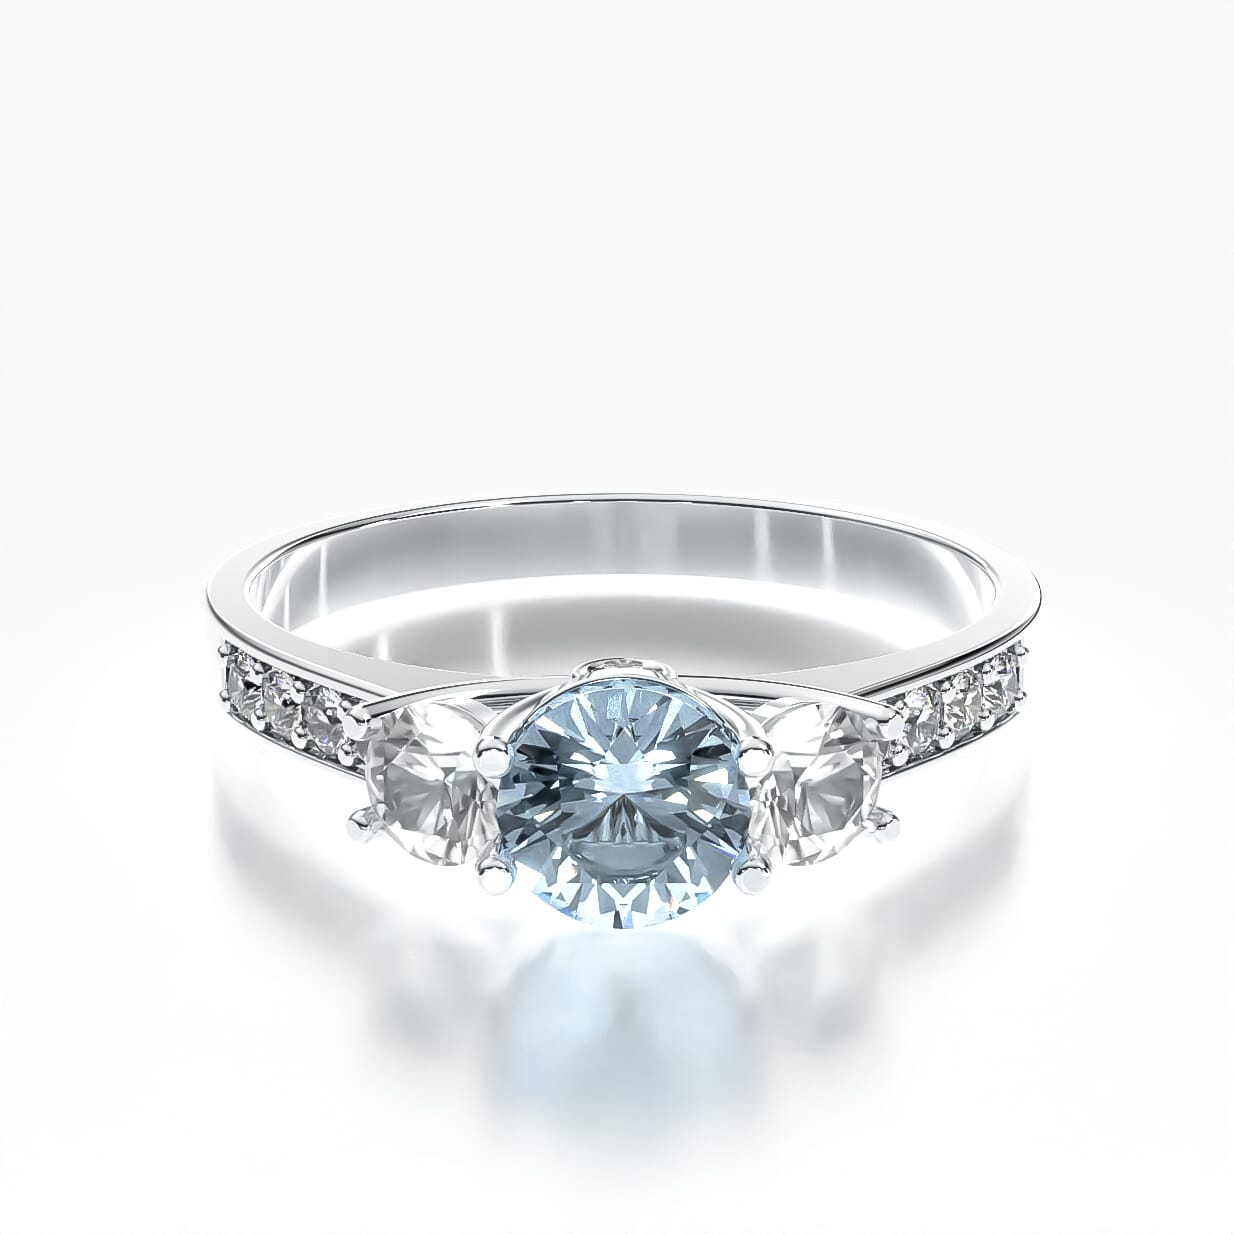 Dream engagement ring: white gold, aquamarine